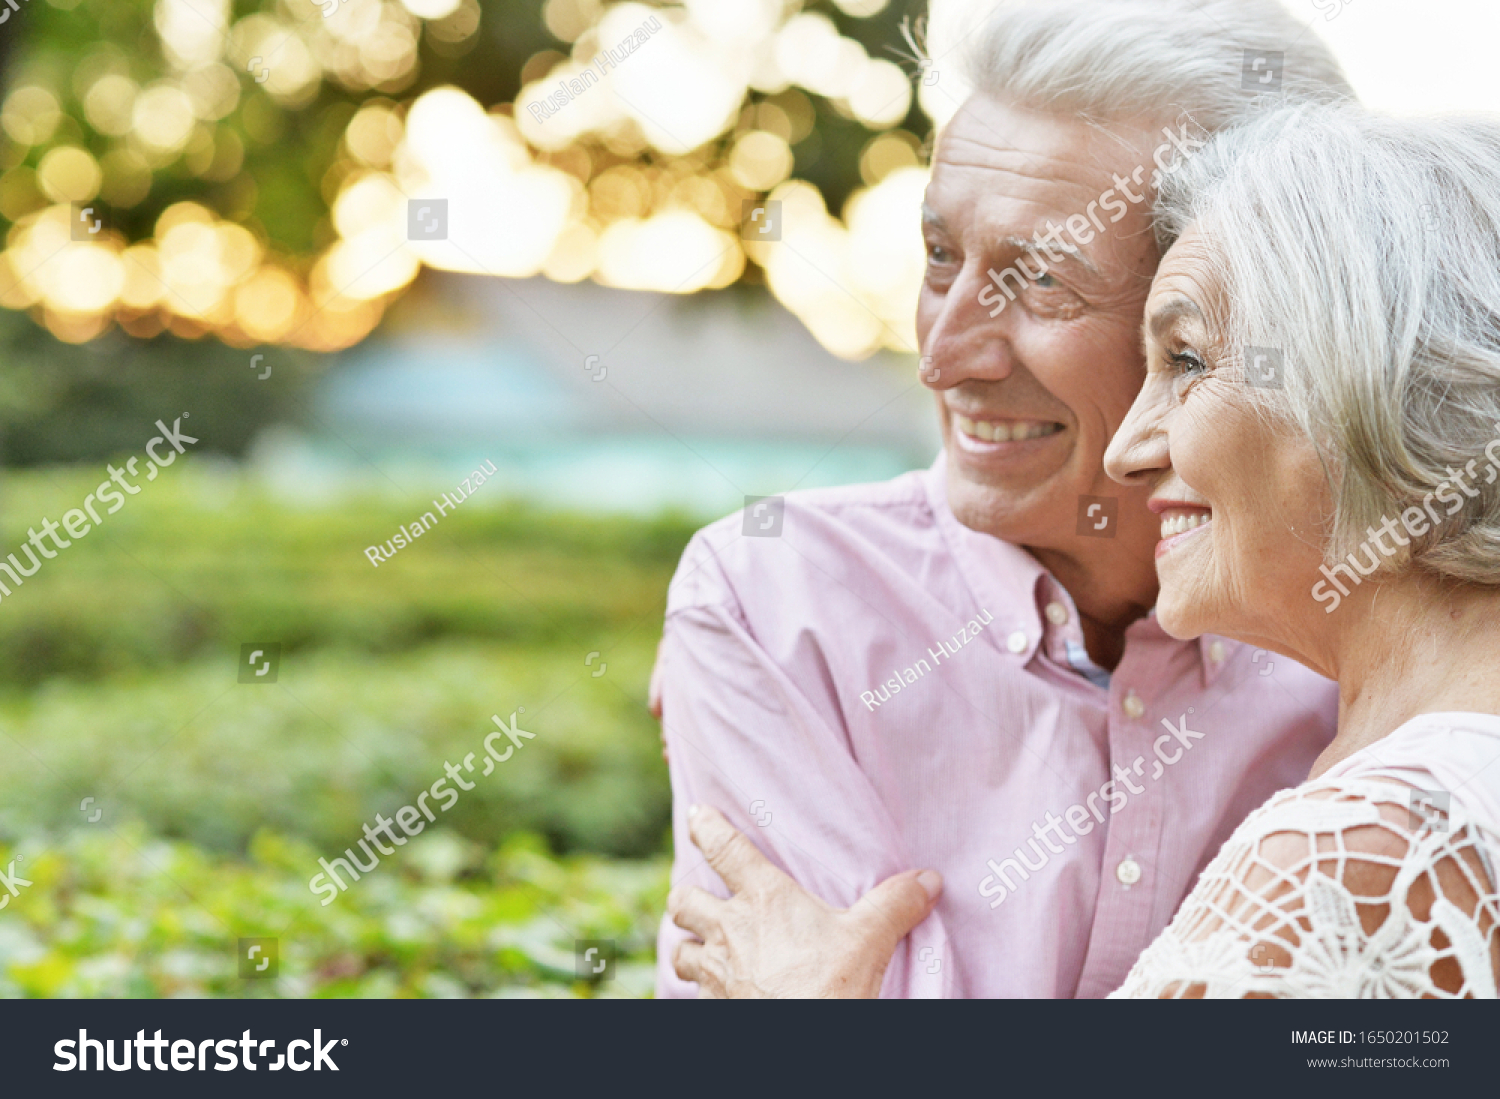 Close up portrait of smiling senior couple embracing in autumn park #1650201502